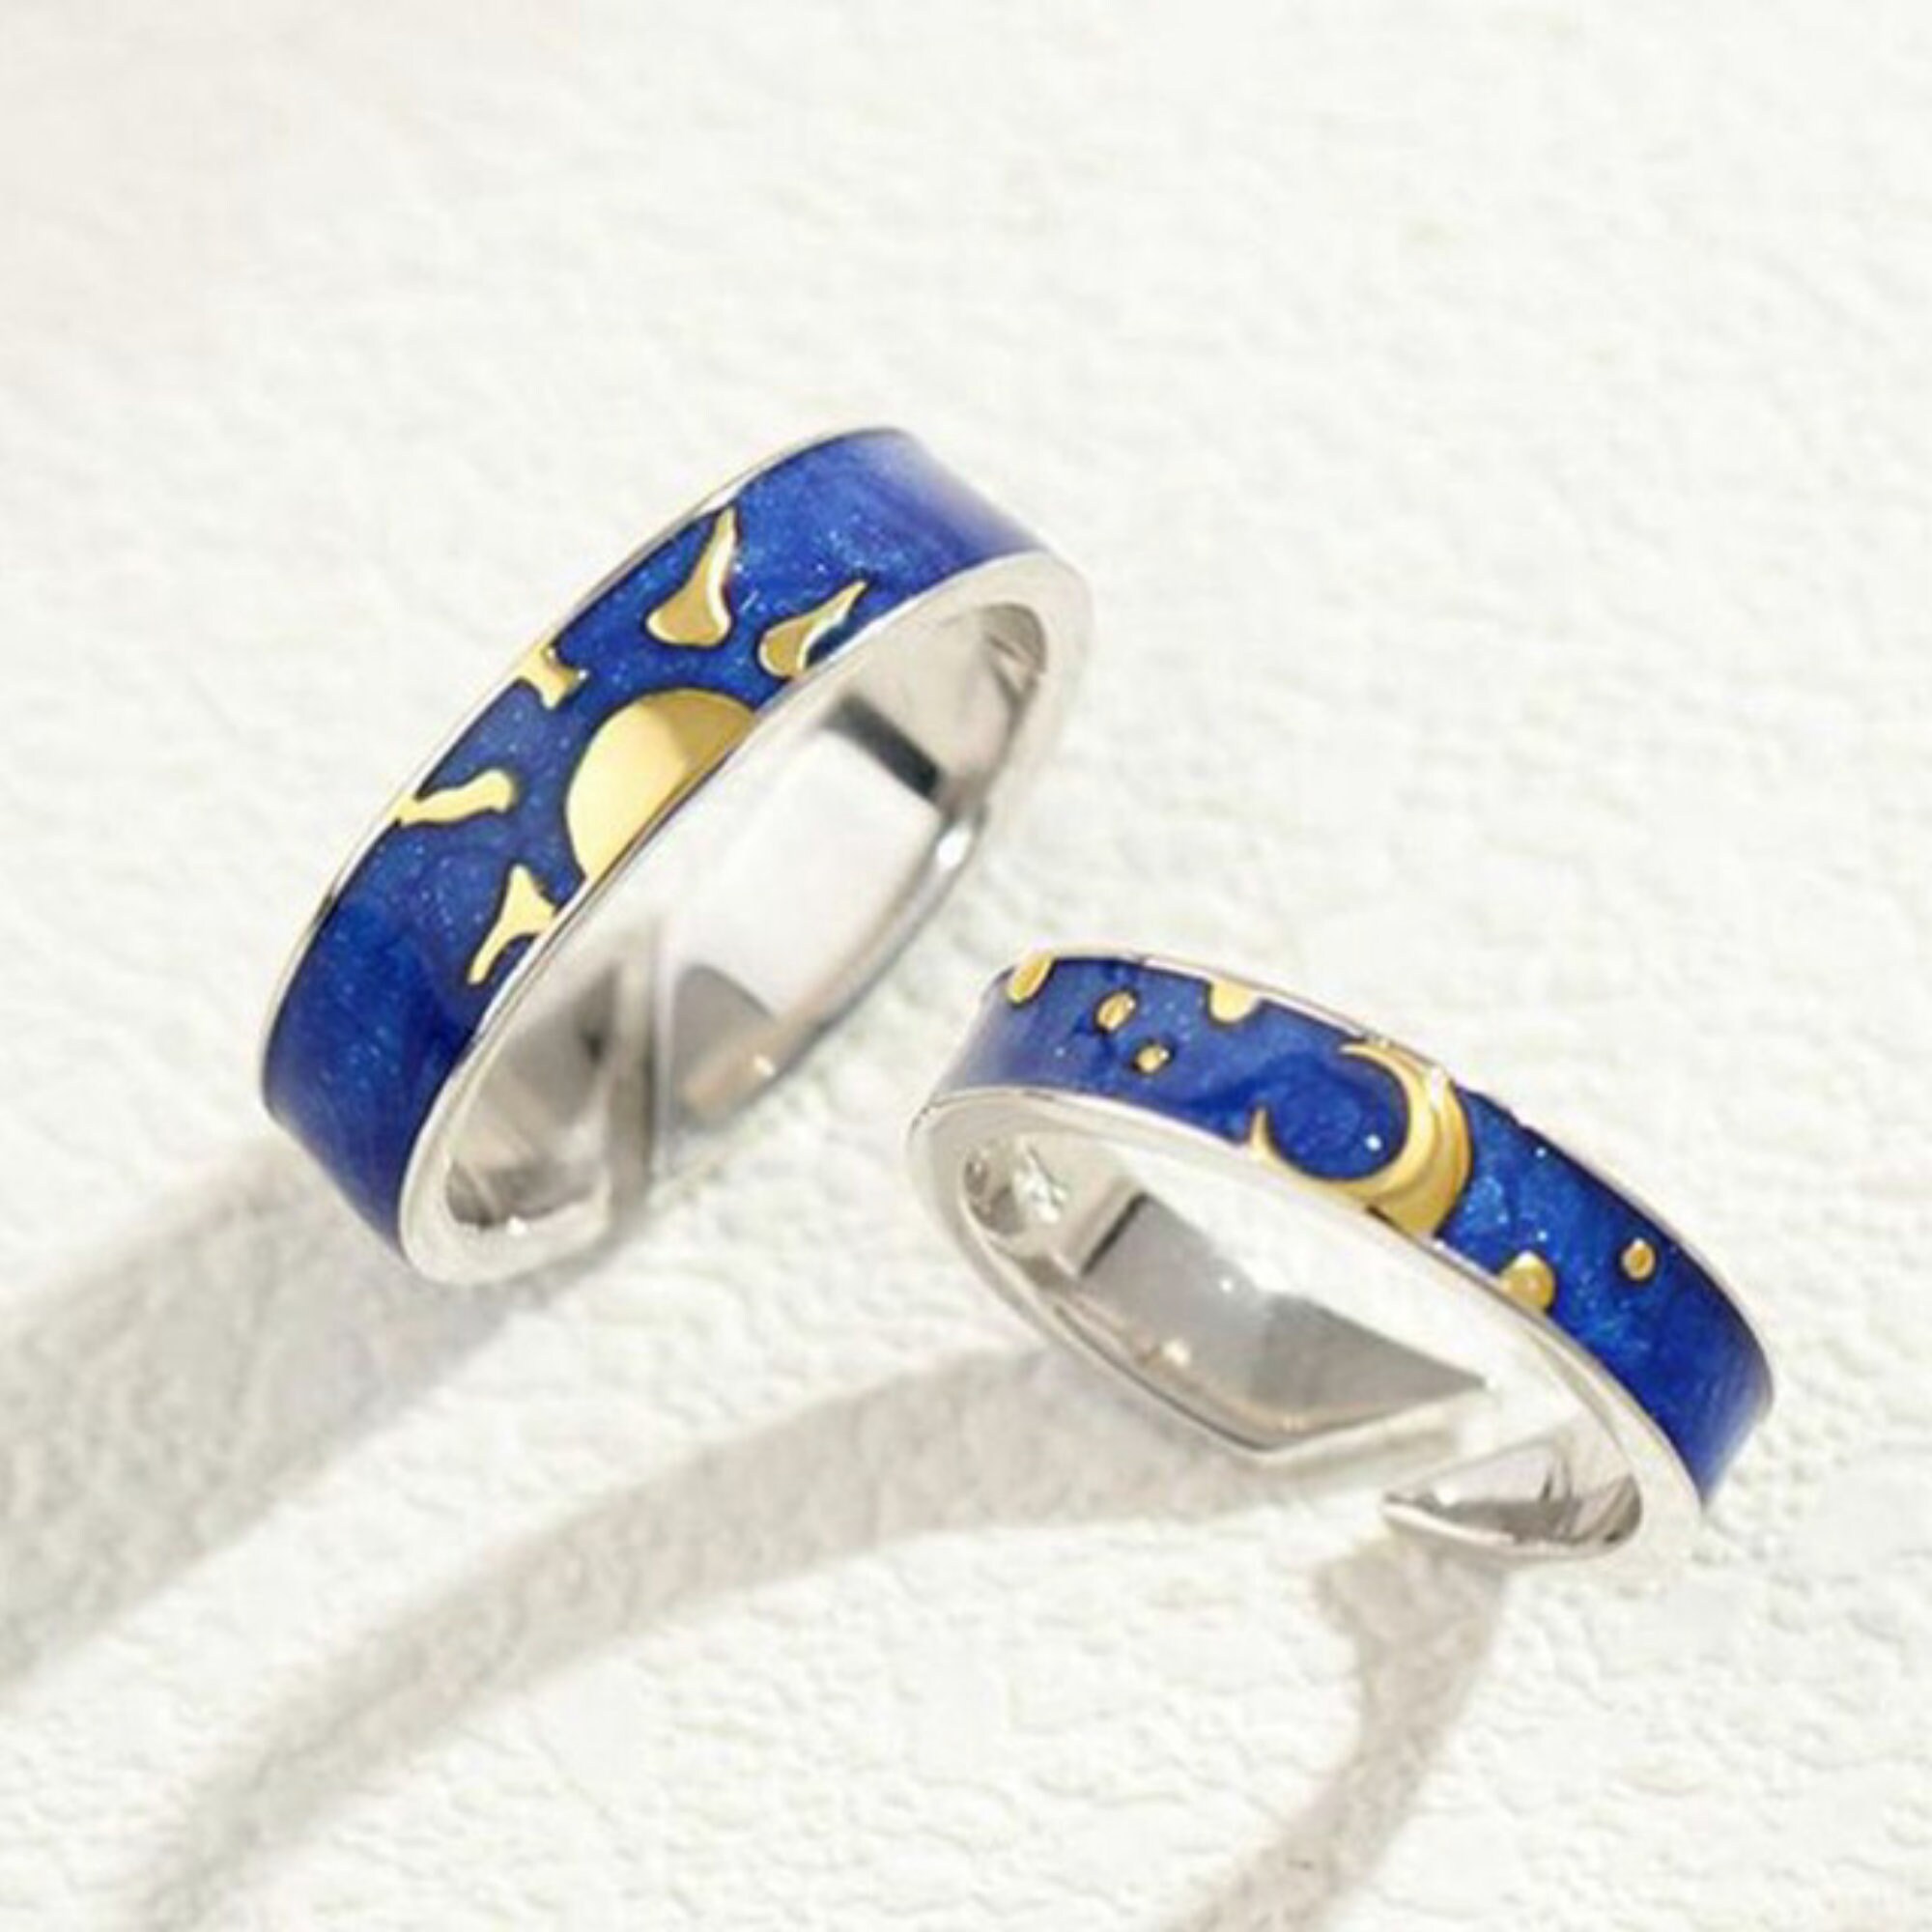 Romantic Blue Van Gogh's Sky Rings Couple Stainless Steel Star Moon Promise Engagement Wedding Band for Men Women 